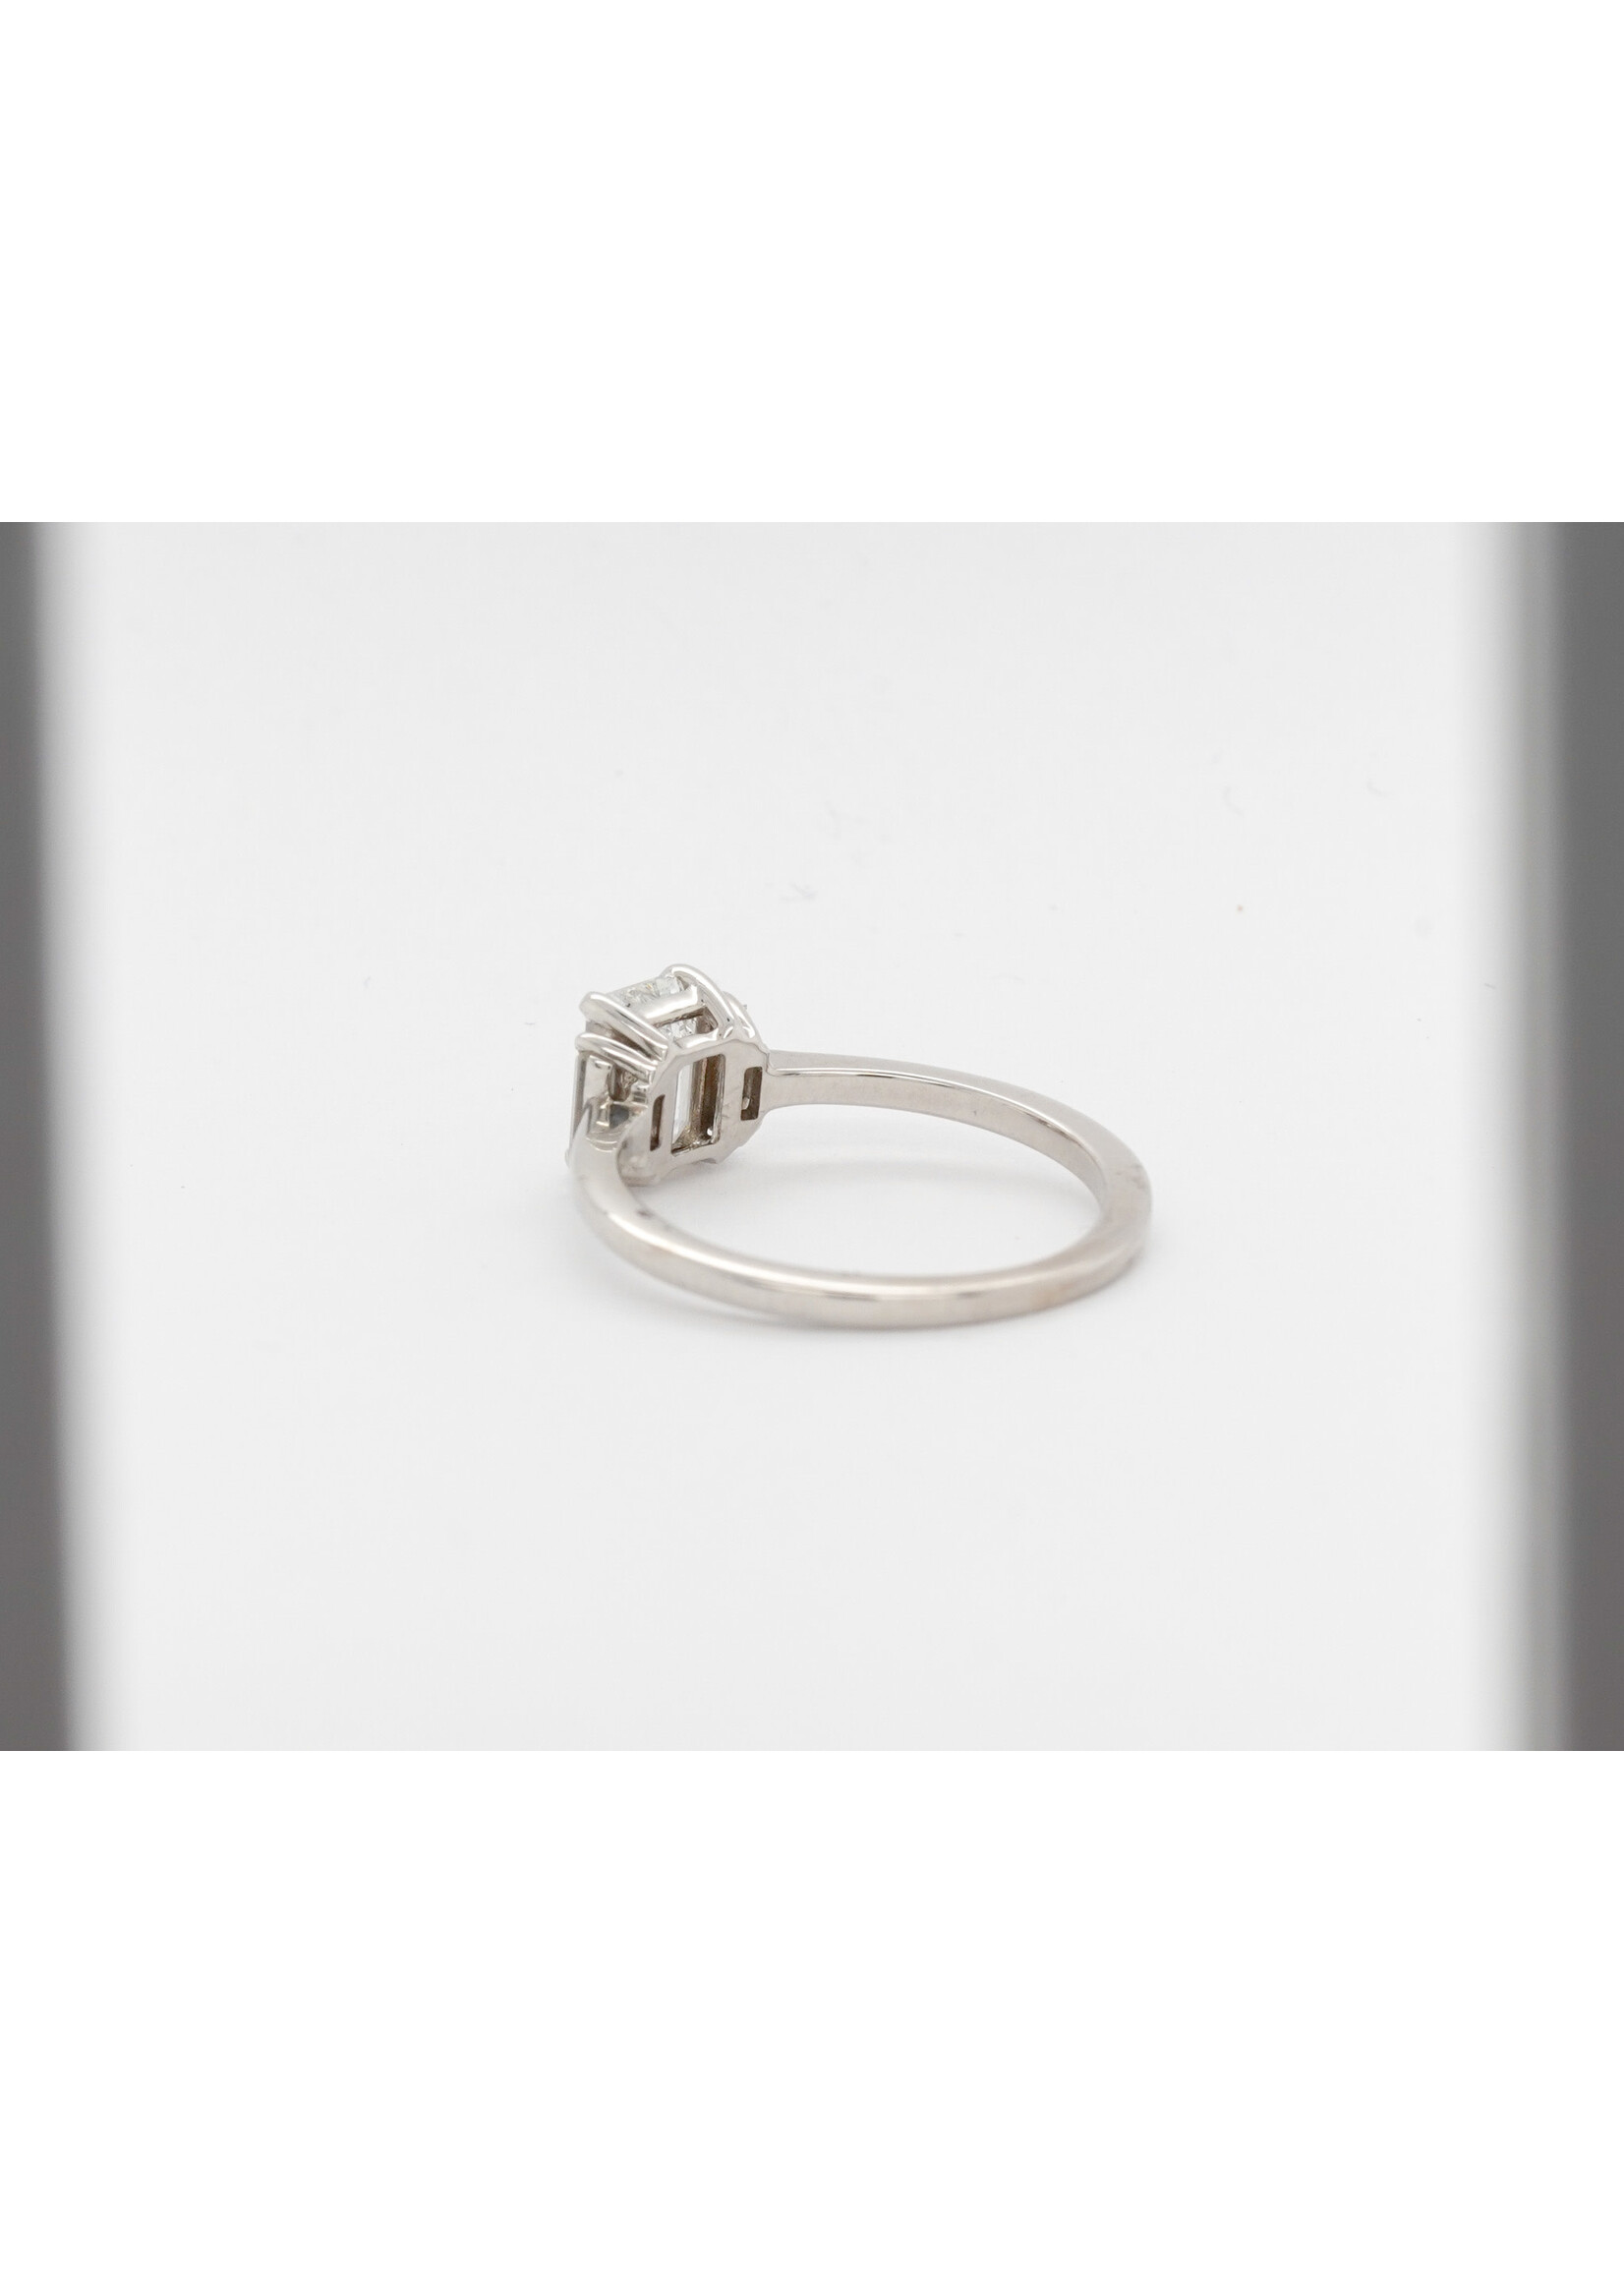 14KW 2.36g 1.20ctw (0.90ctr) Emerald Cut Diamond Engagement Ring (size 5.5)